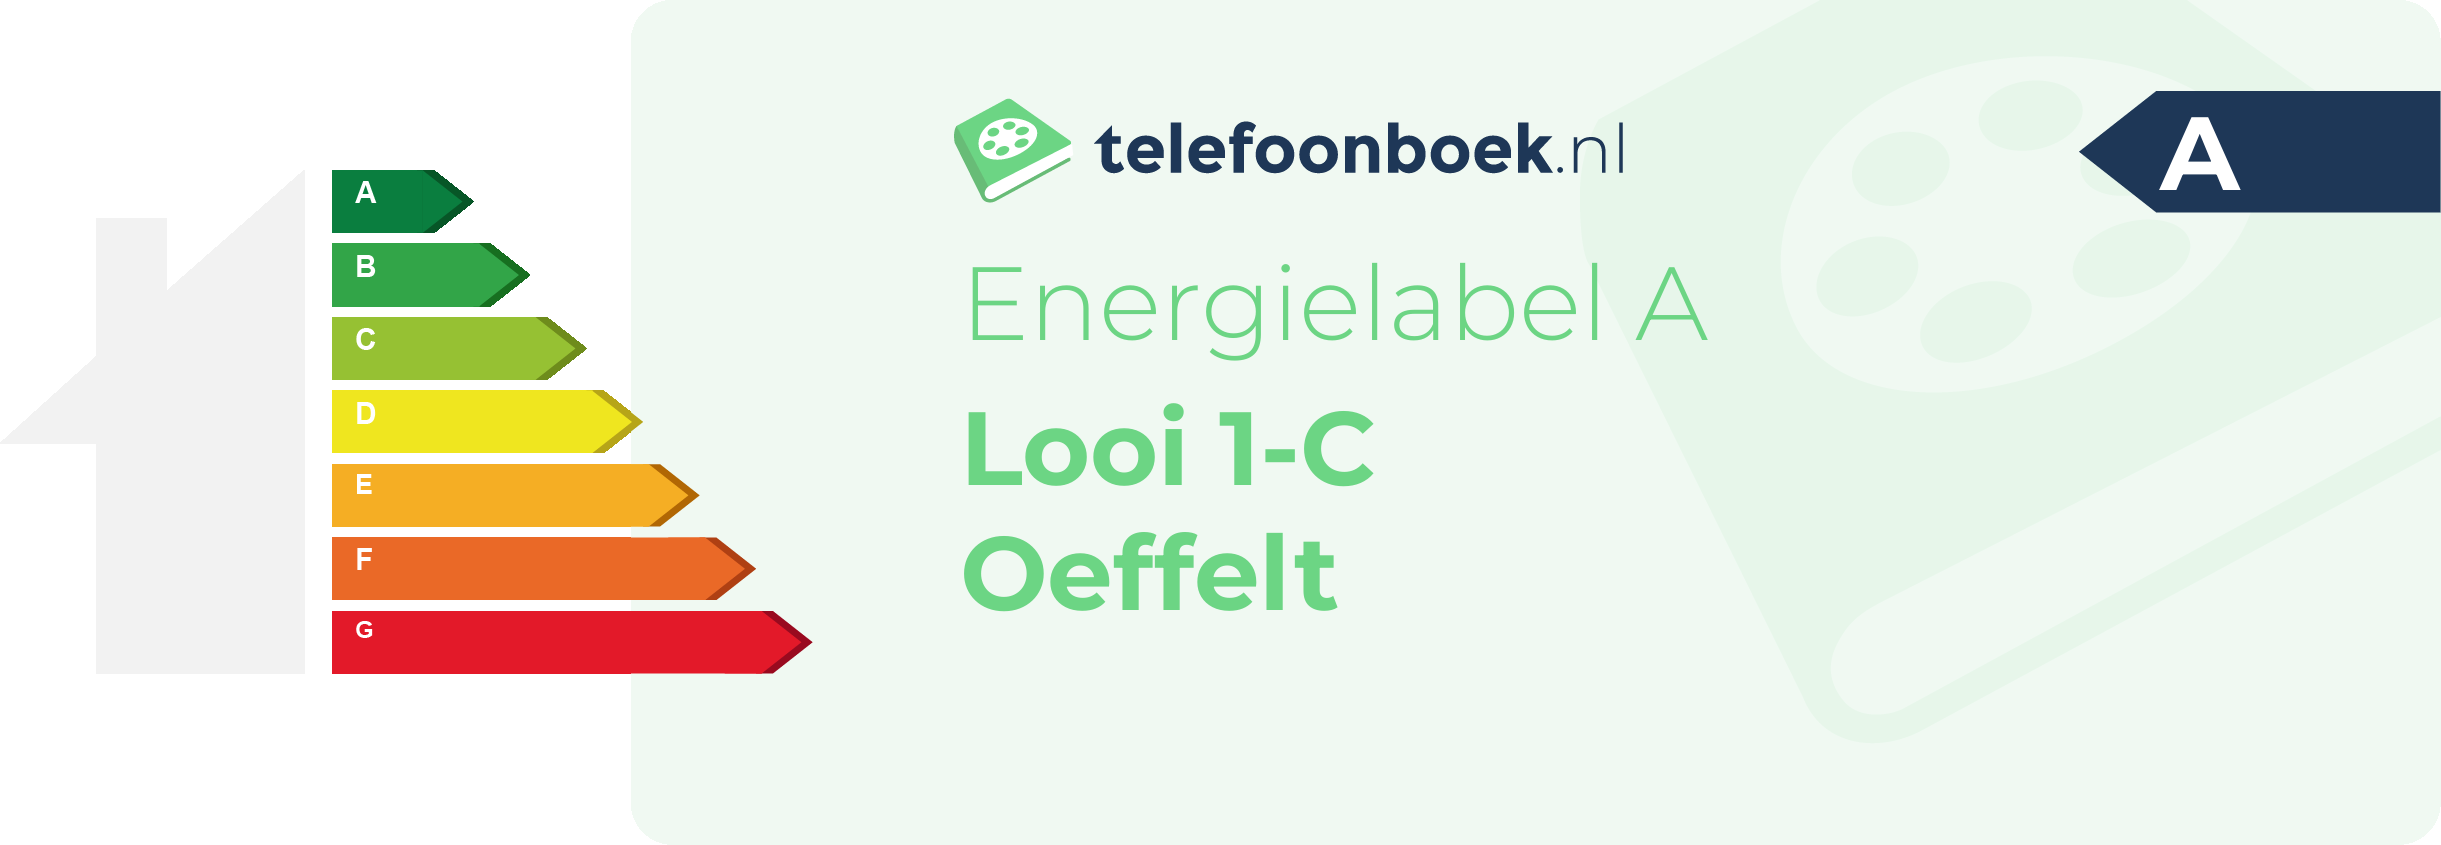 Energielabel Looi 1-C Oeffelt